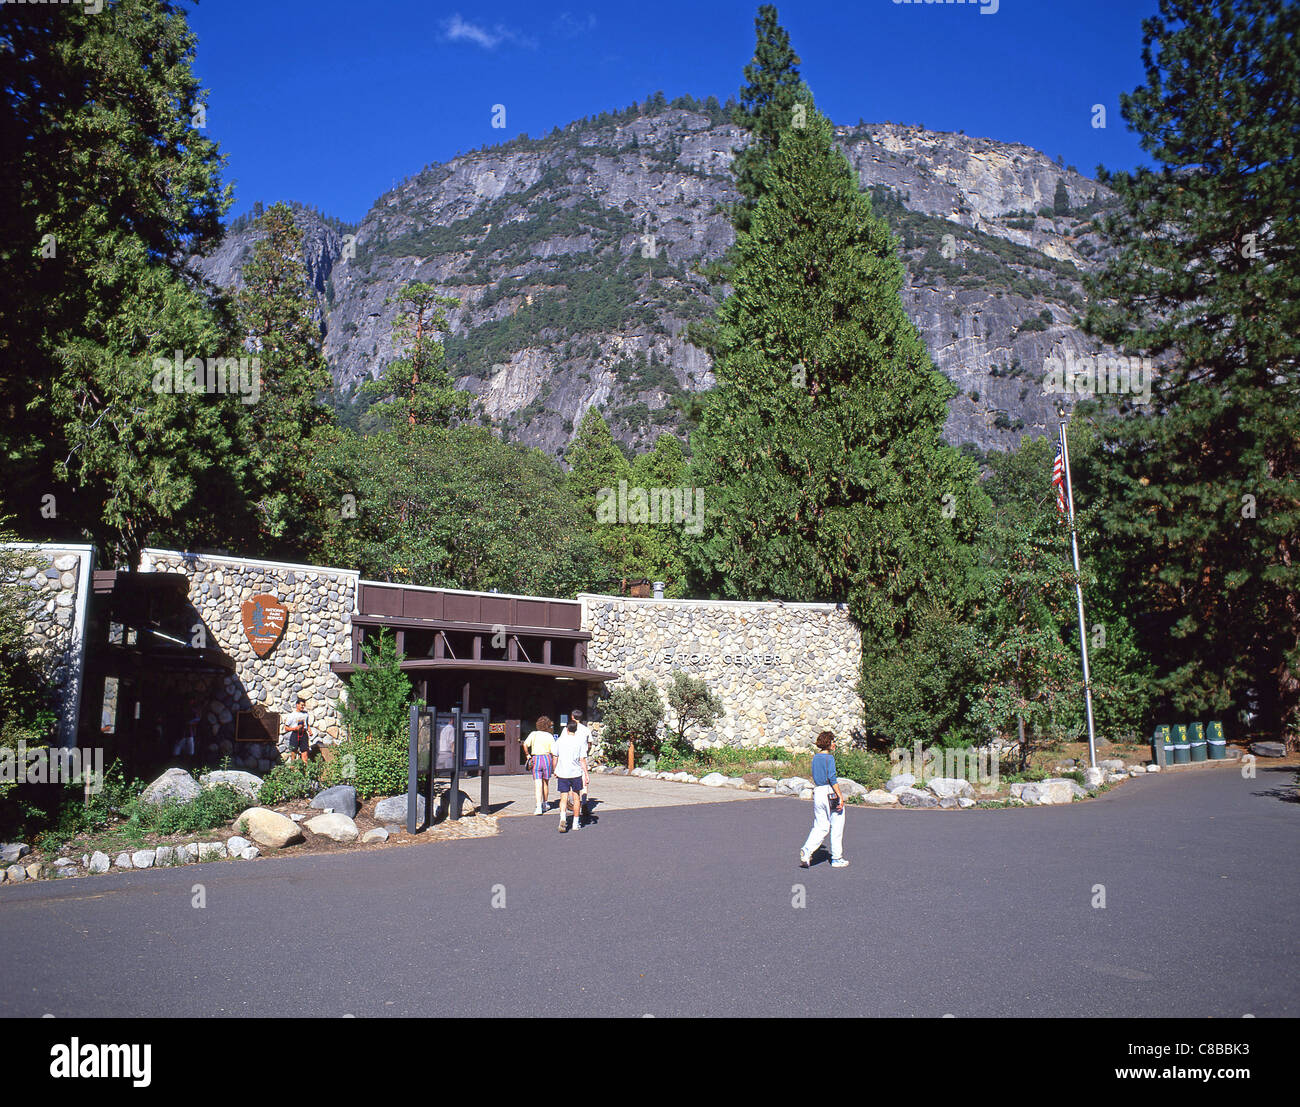 Centro de Servicio de Parque Nacional, Parque Nacional Yosemite, California, Estados Unidos de América Foto de stock